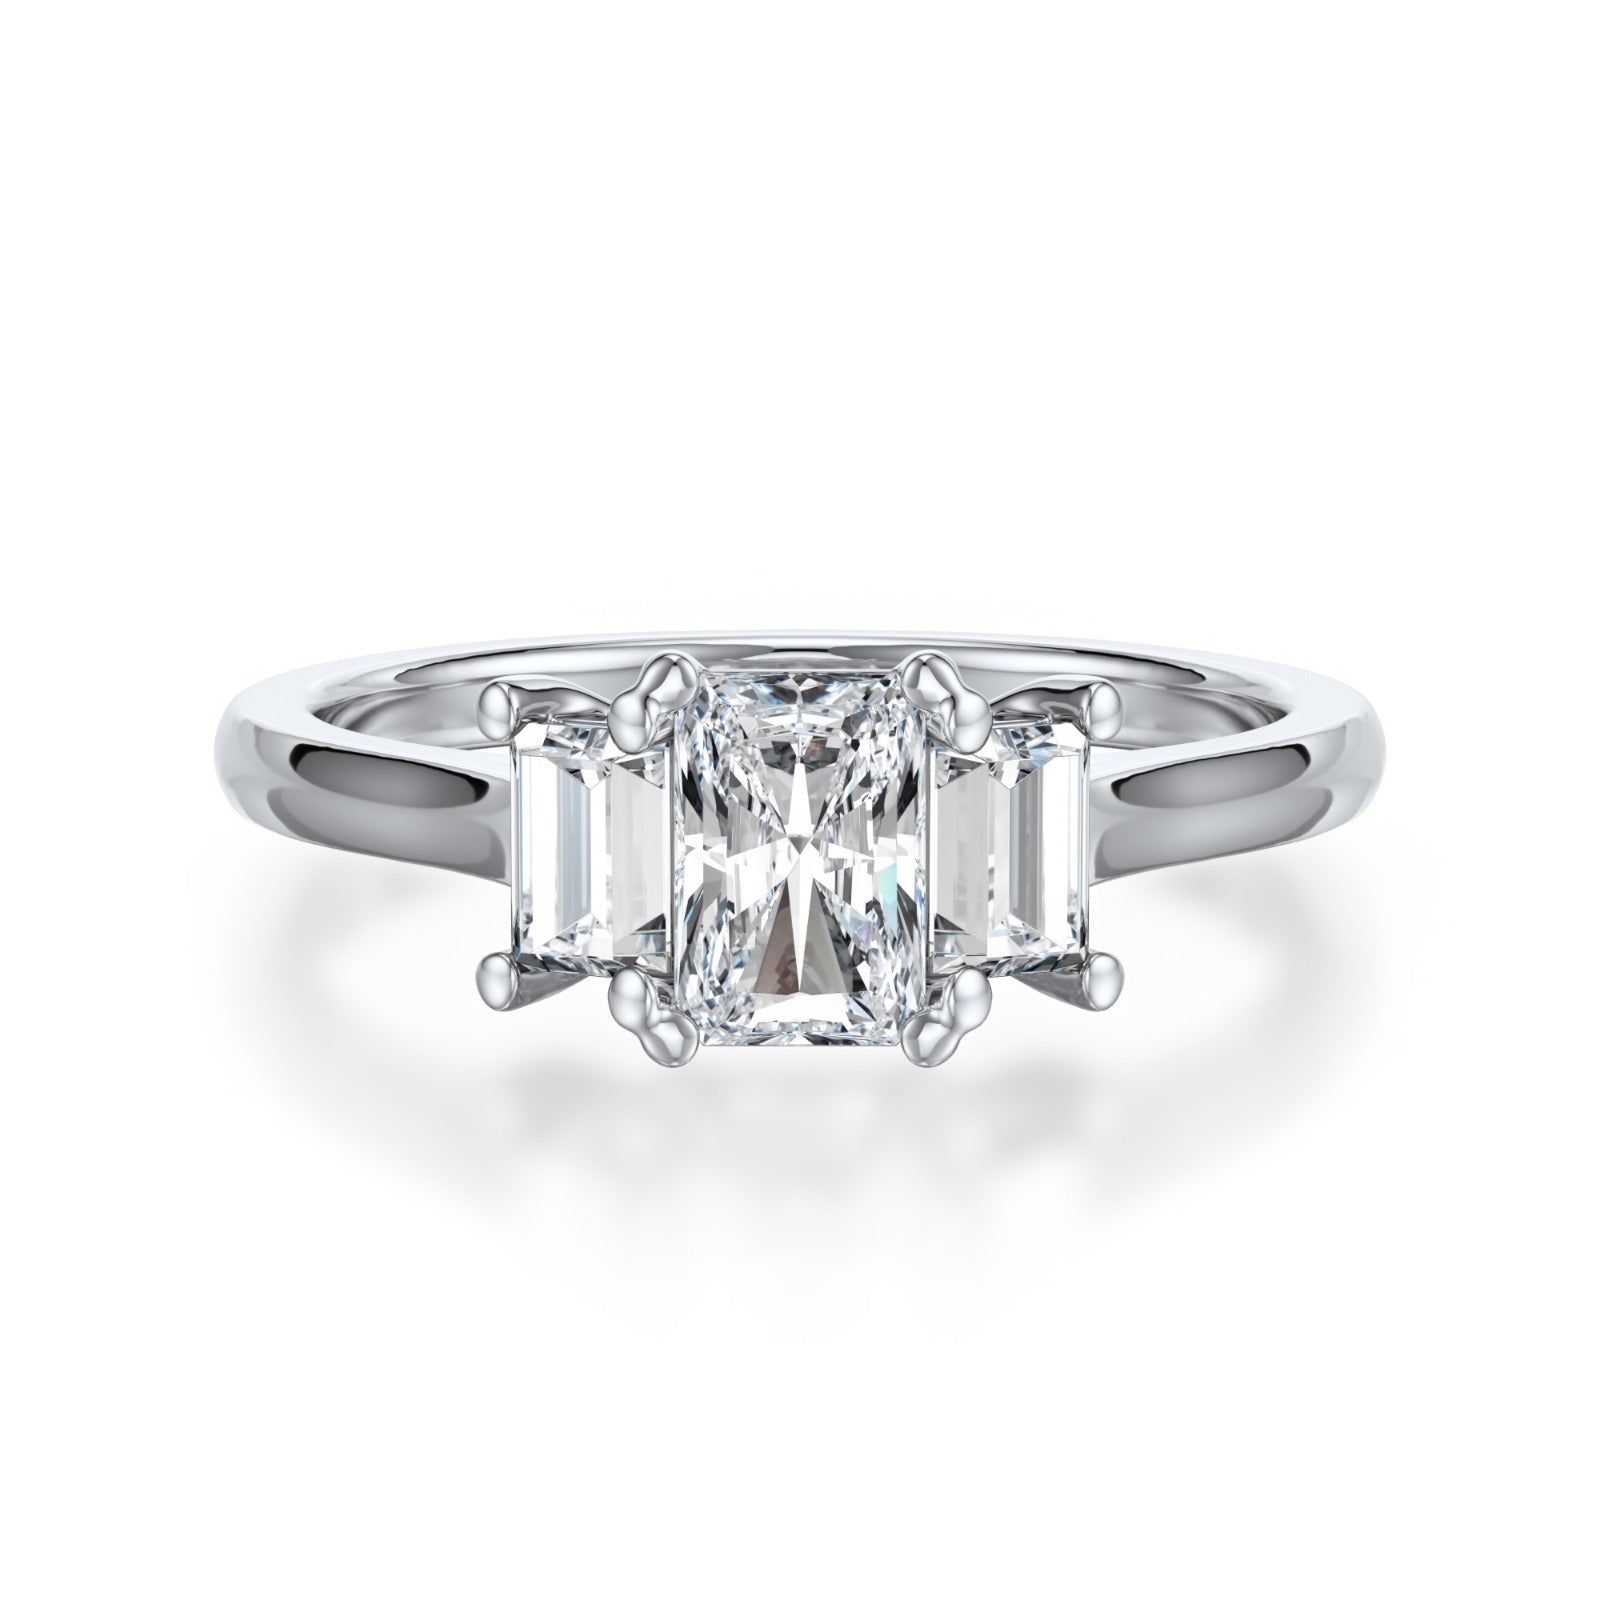 Radiant Trilogy Diamond ring in Platinum